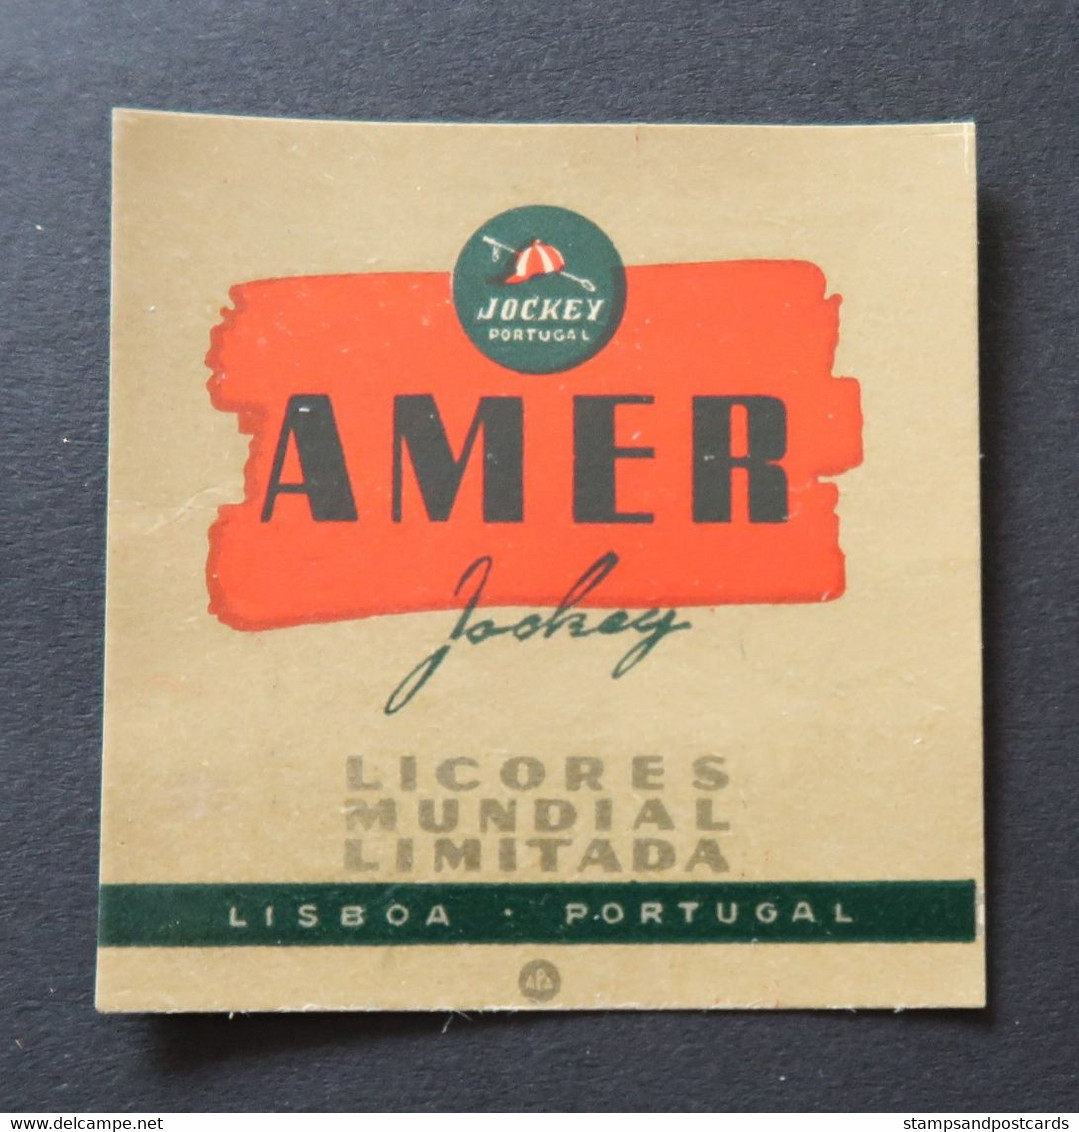 Portugal 6 etiquettes anciennes Liqueurs Jockey Kirsch Kummel Amer Bitter Lisboa 6 labels liquors